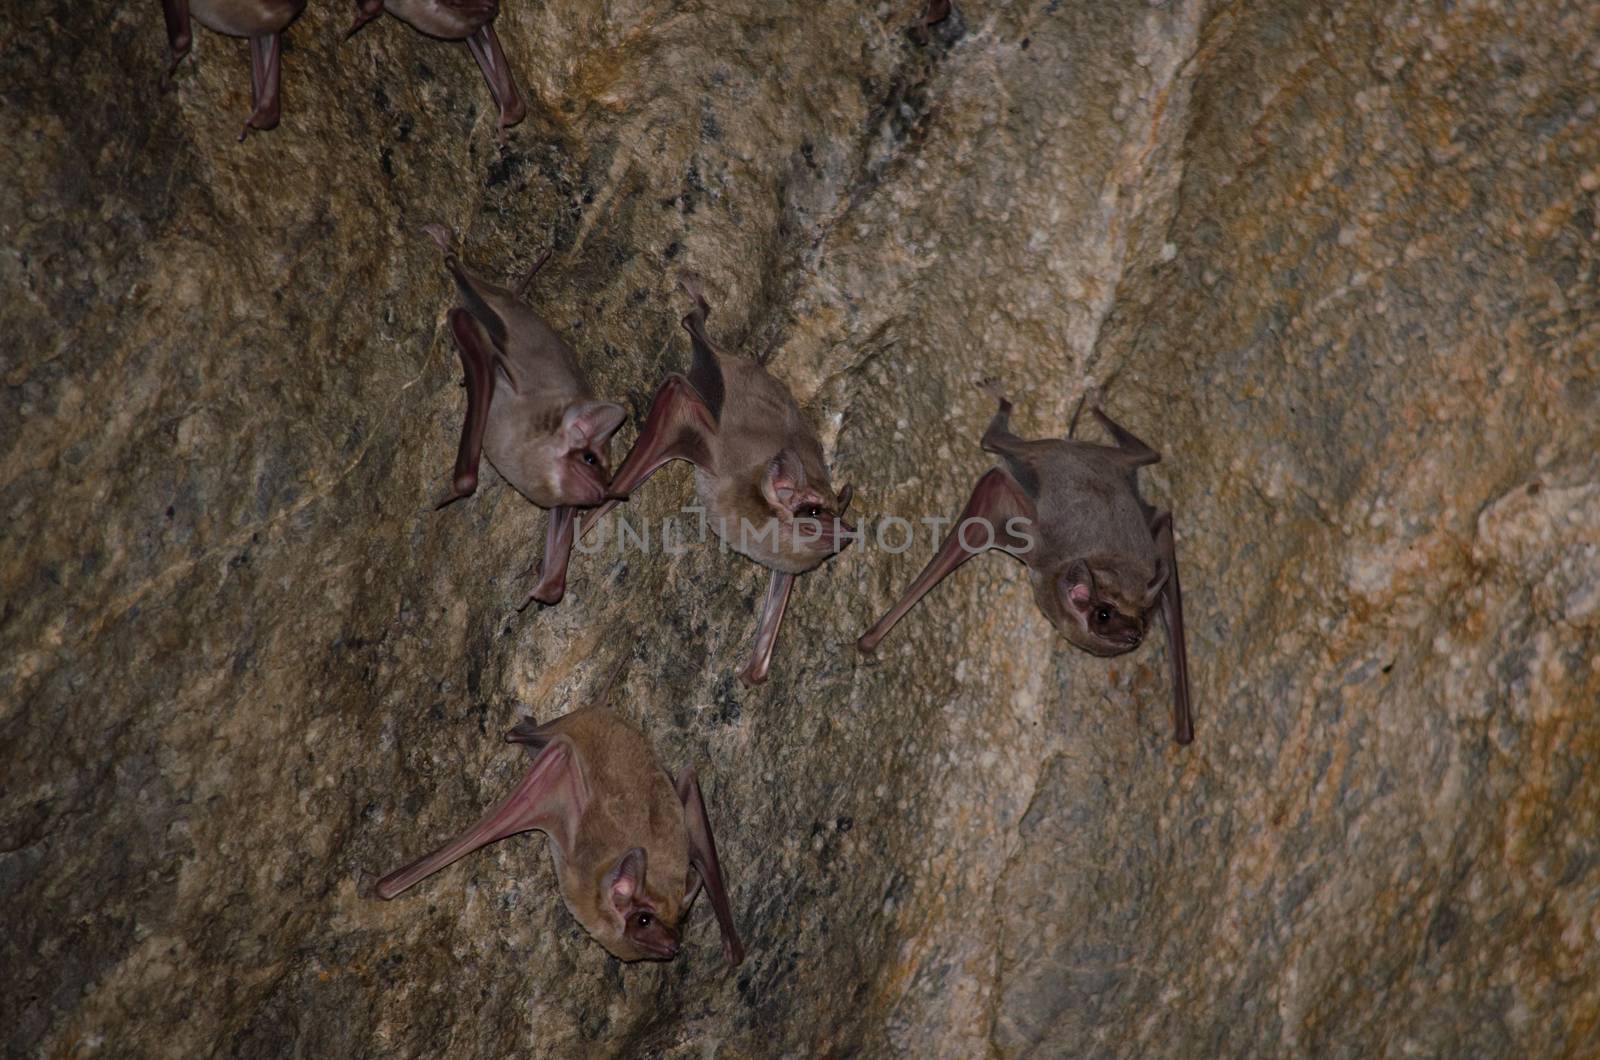 bat is mammal and call "vampire" by visanuwit